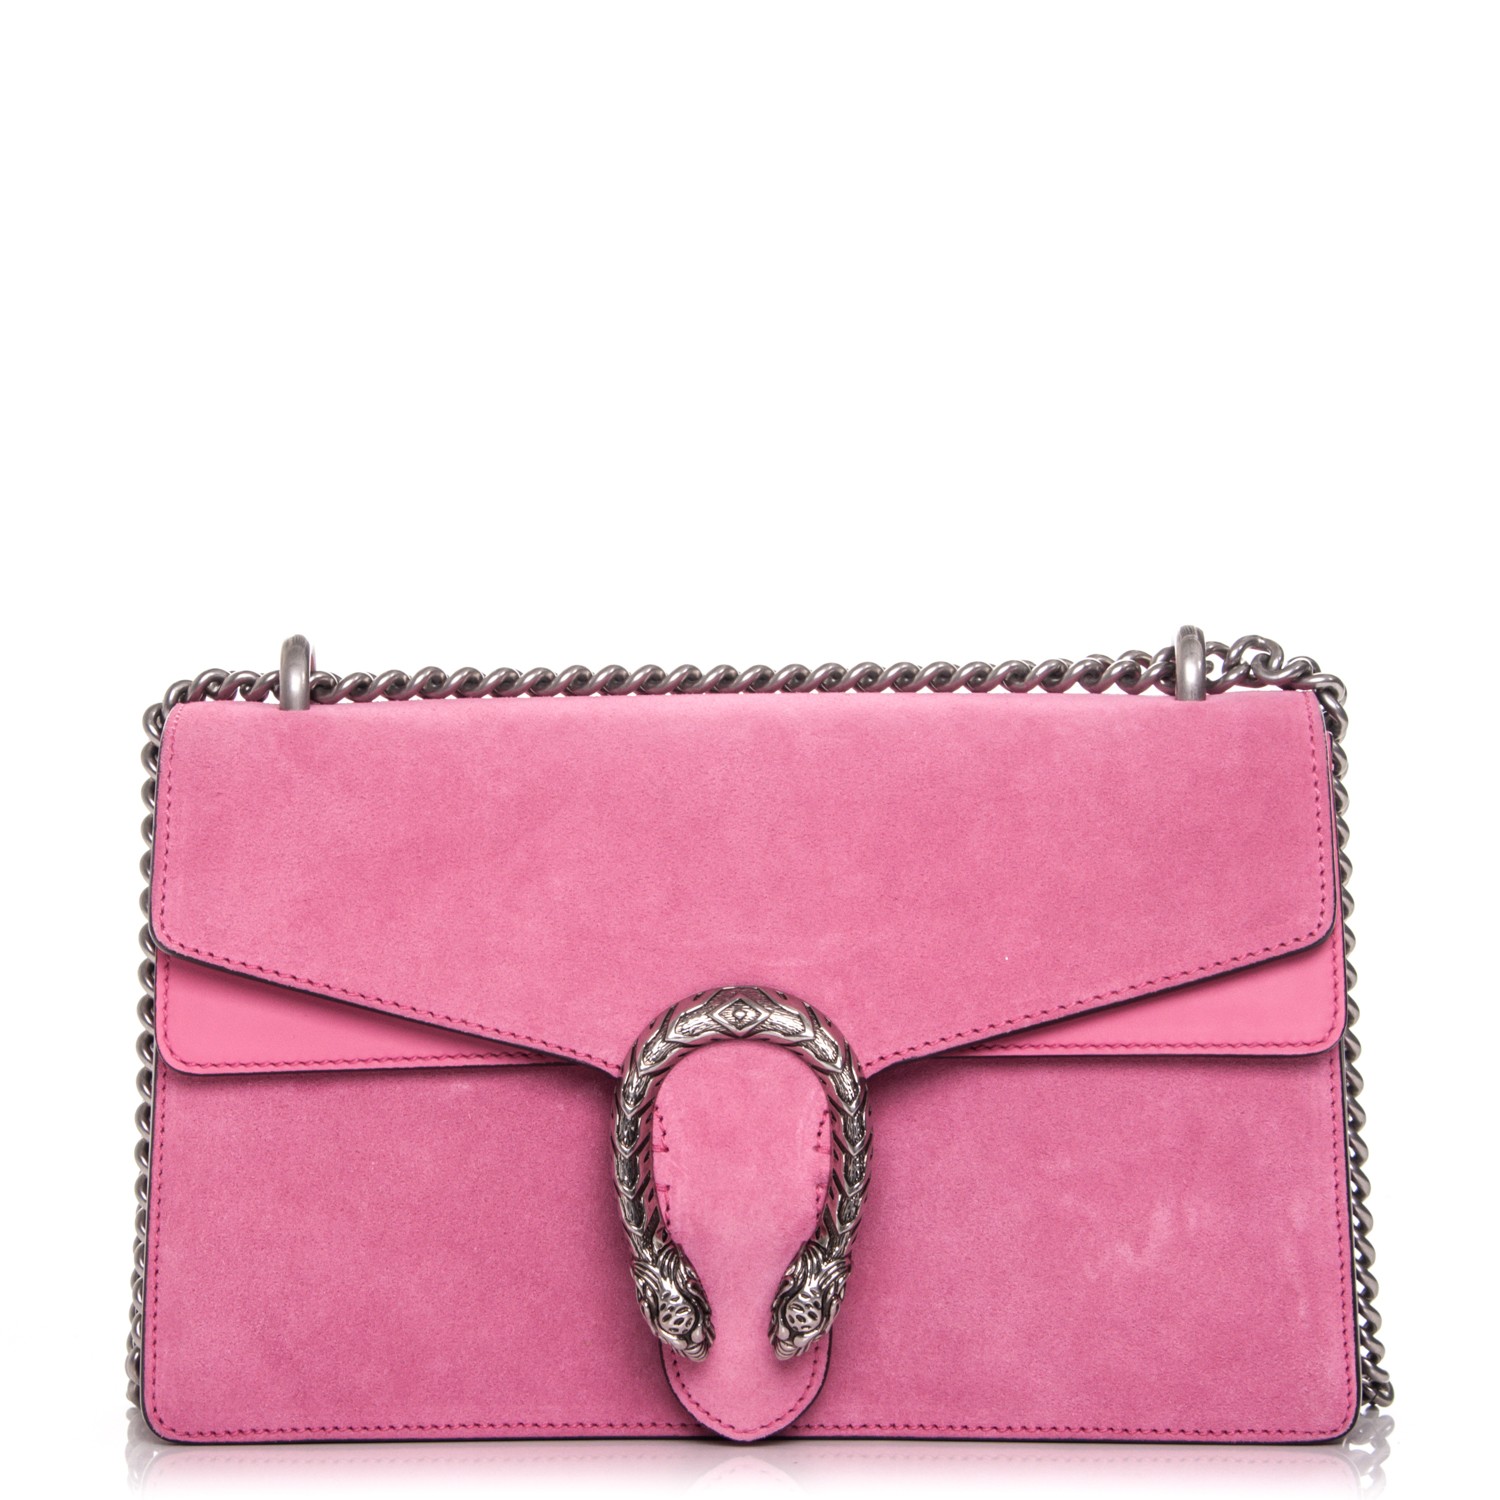 pink suede gucci bag